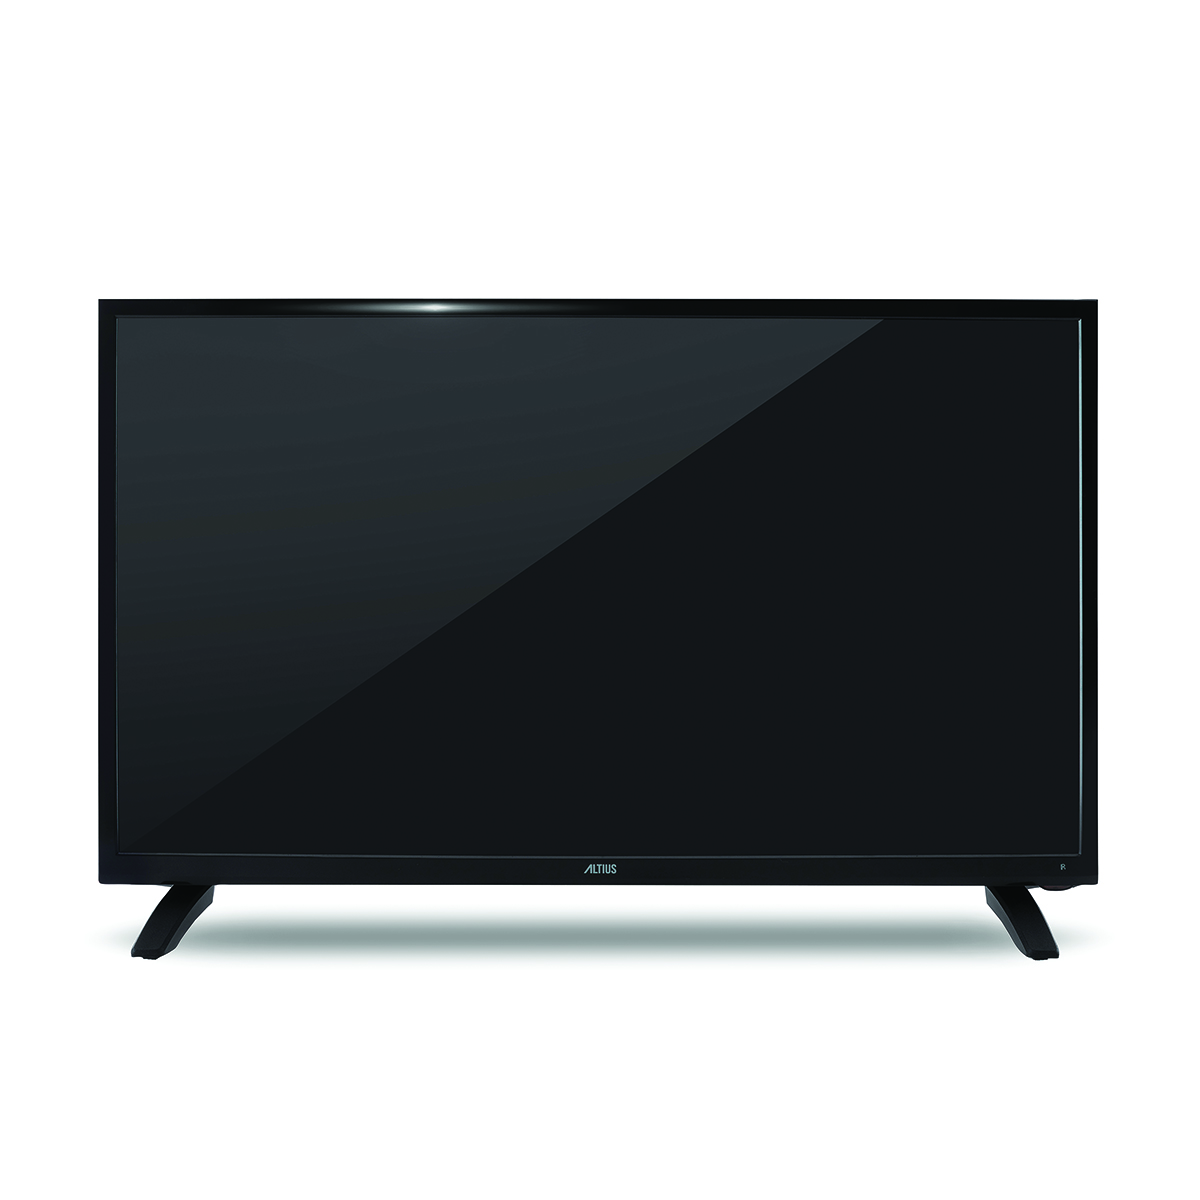 Altius Smart TV 32 Inch 240/12V